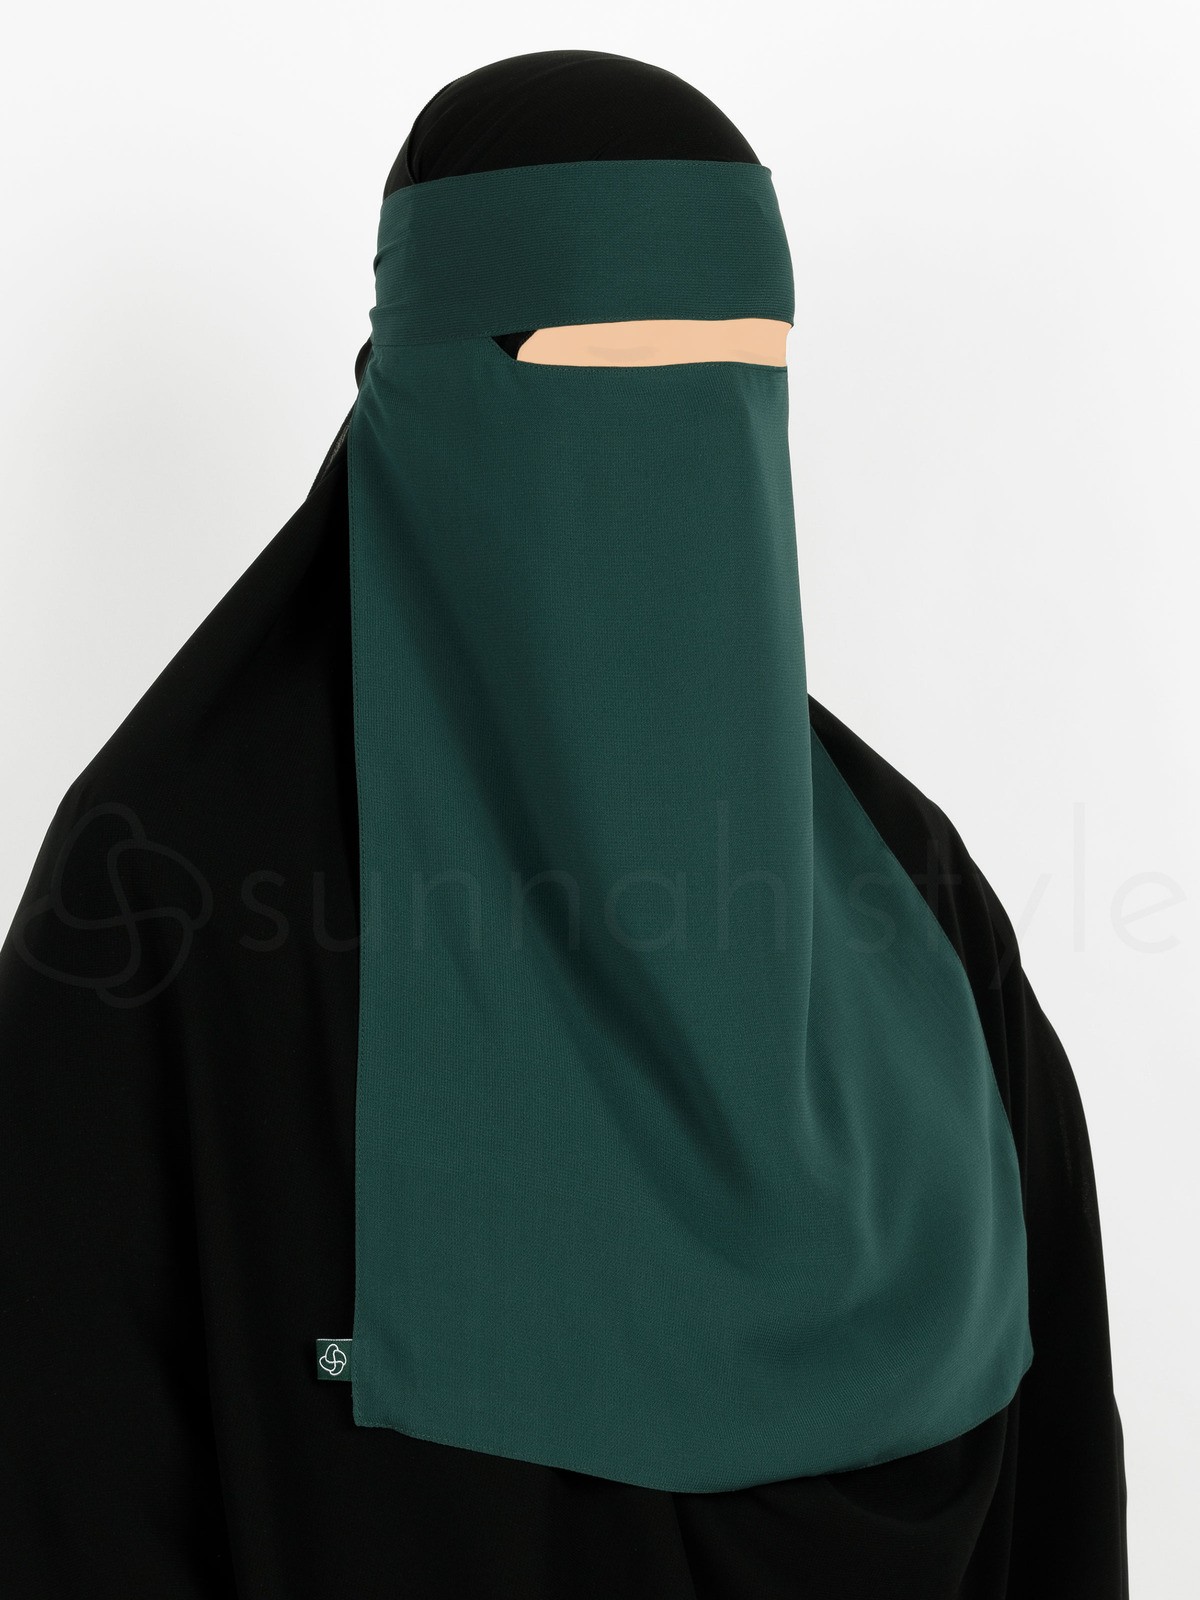 Sunnah Style - Narrow No-Pinch One Layer Niqab (Pine)